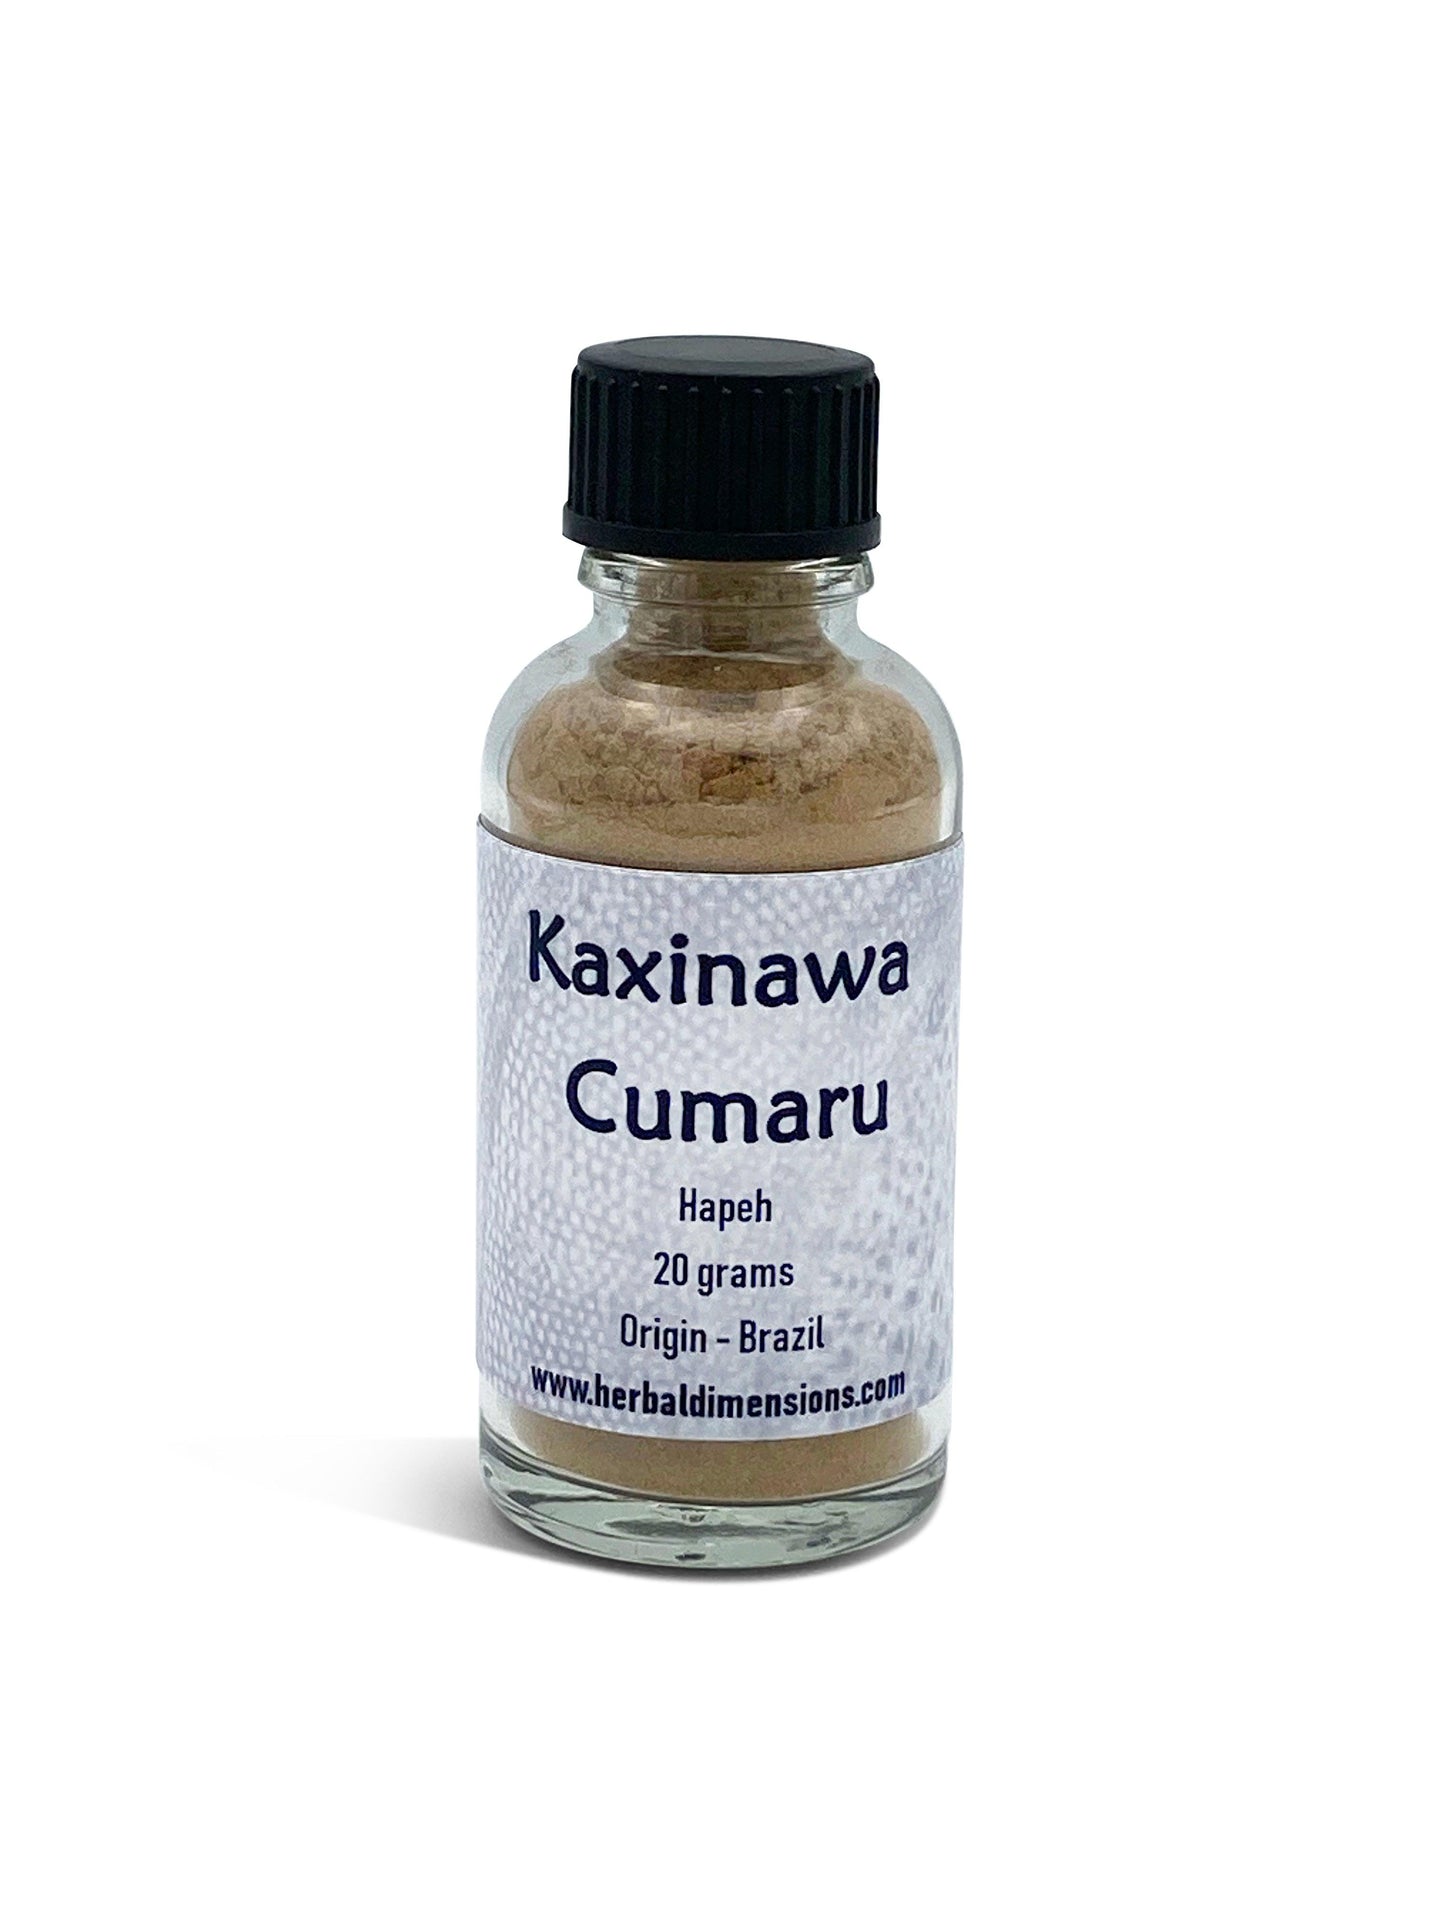 Kaxinawa Cumaru - Herbaldimensions.com